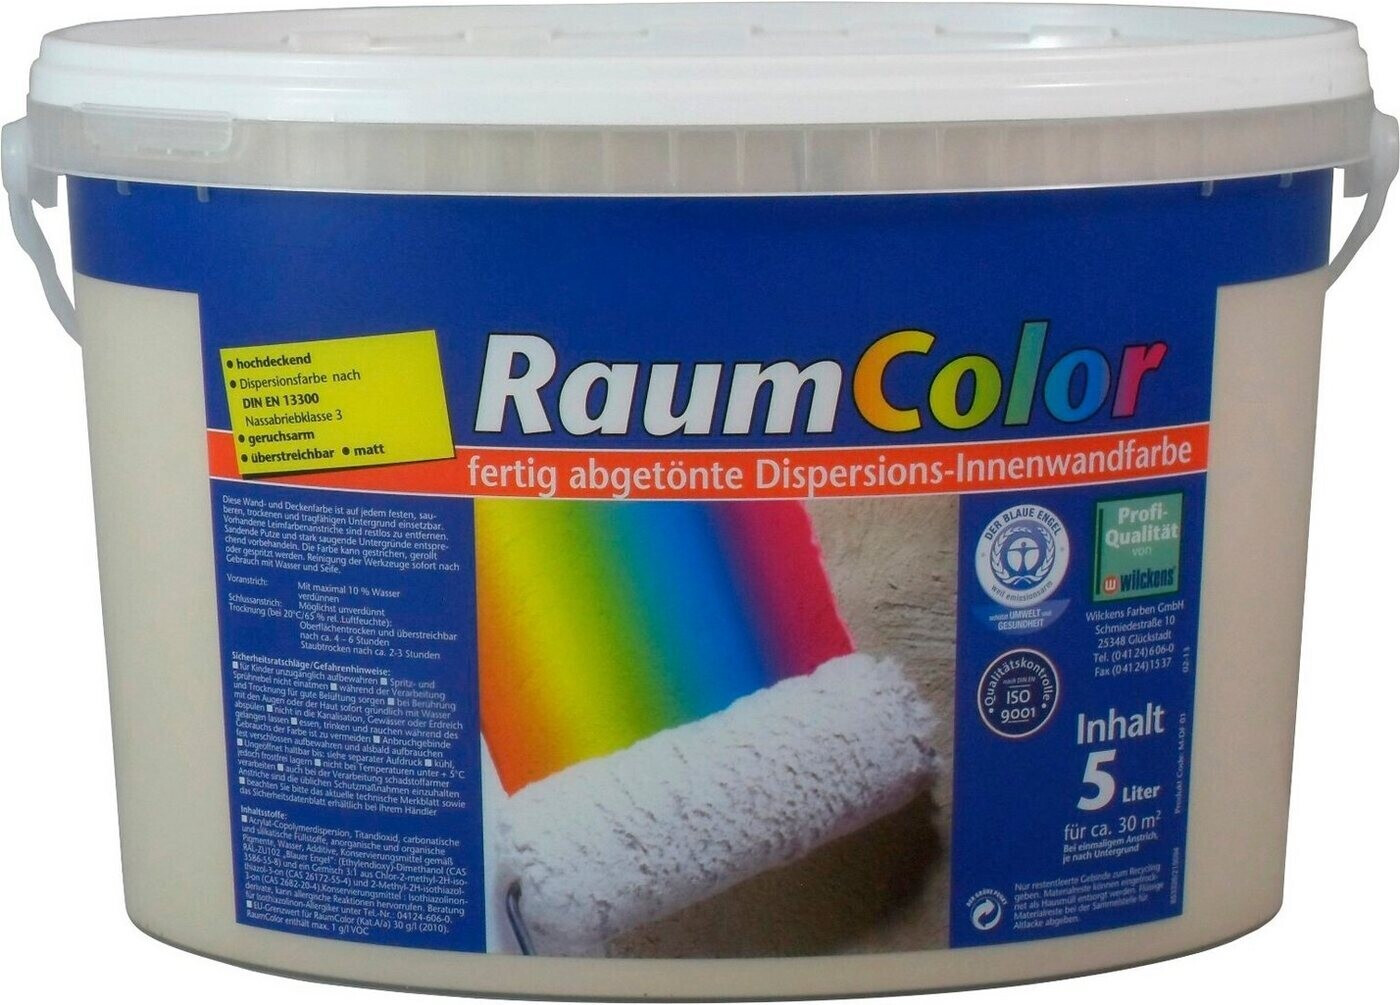 15,99 Wilckens Raumcolor € bei Dispersions-Innenfarbe Preisvergleich ab 5 | l